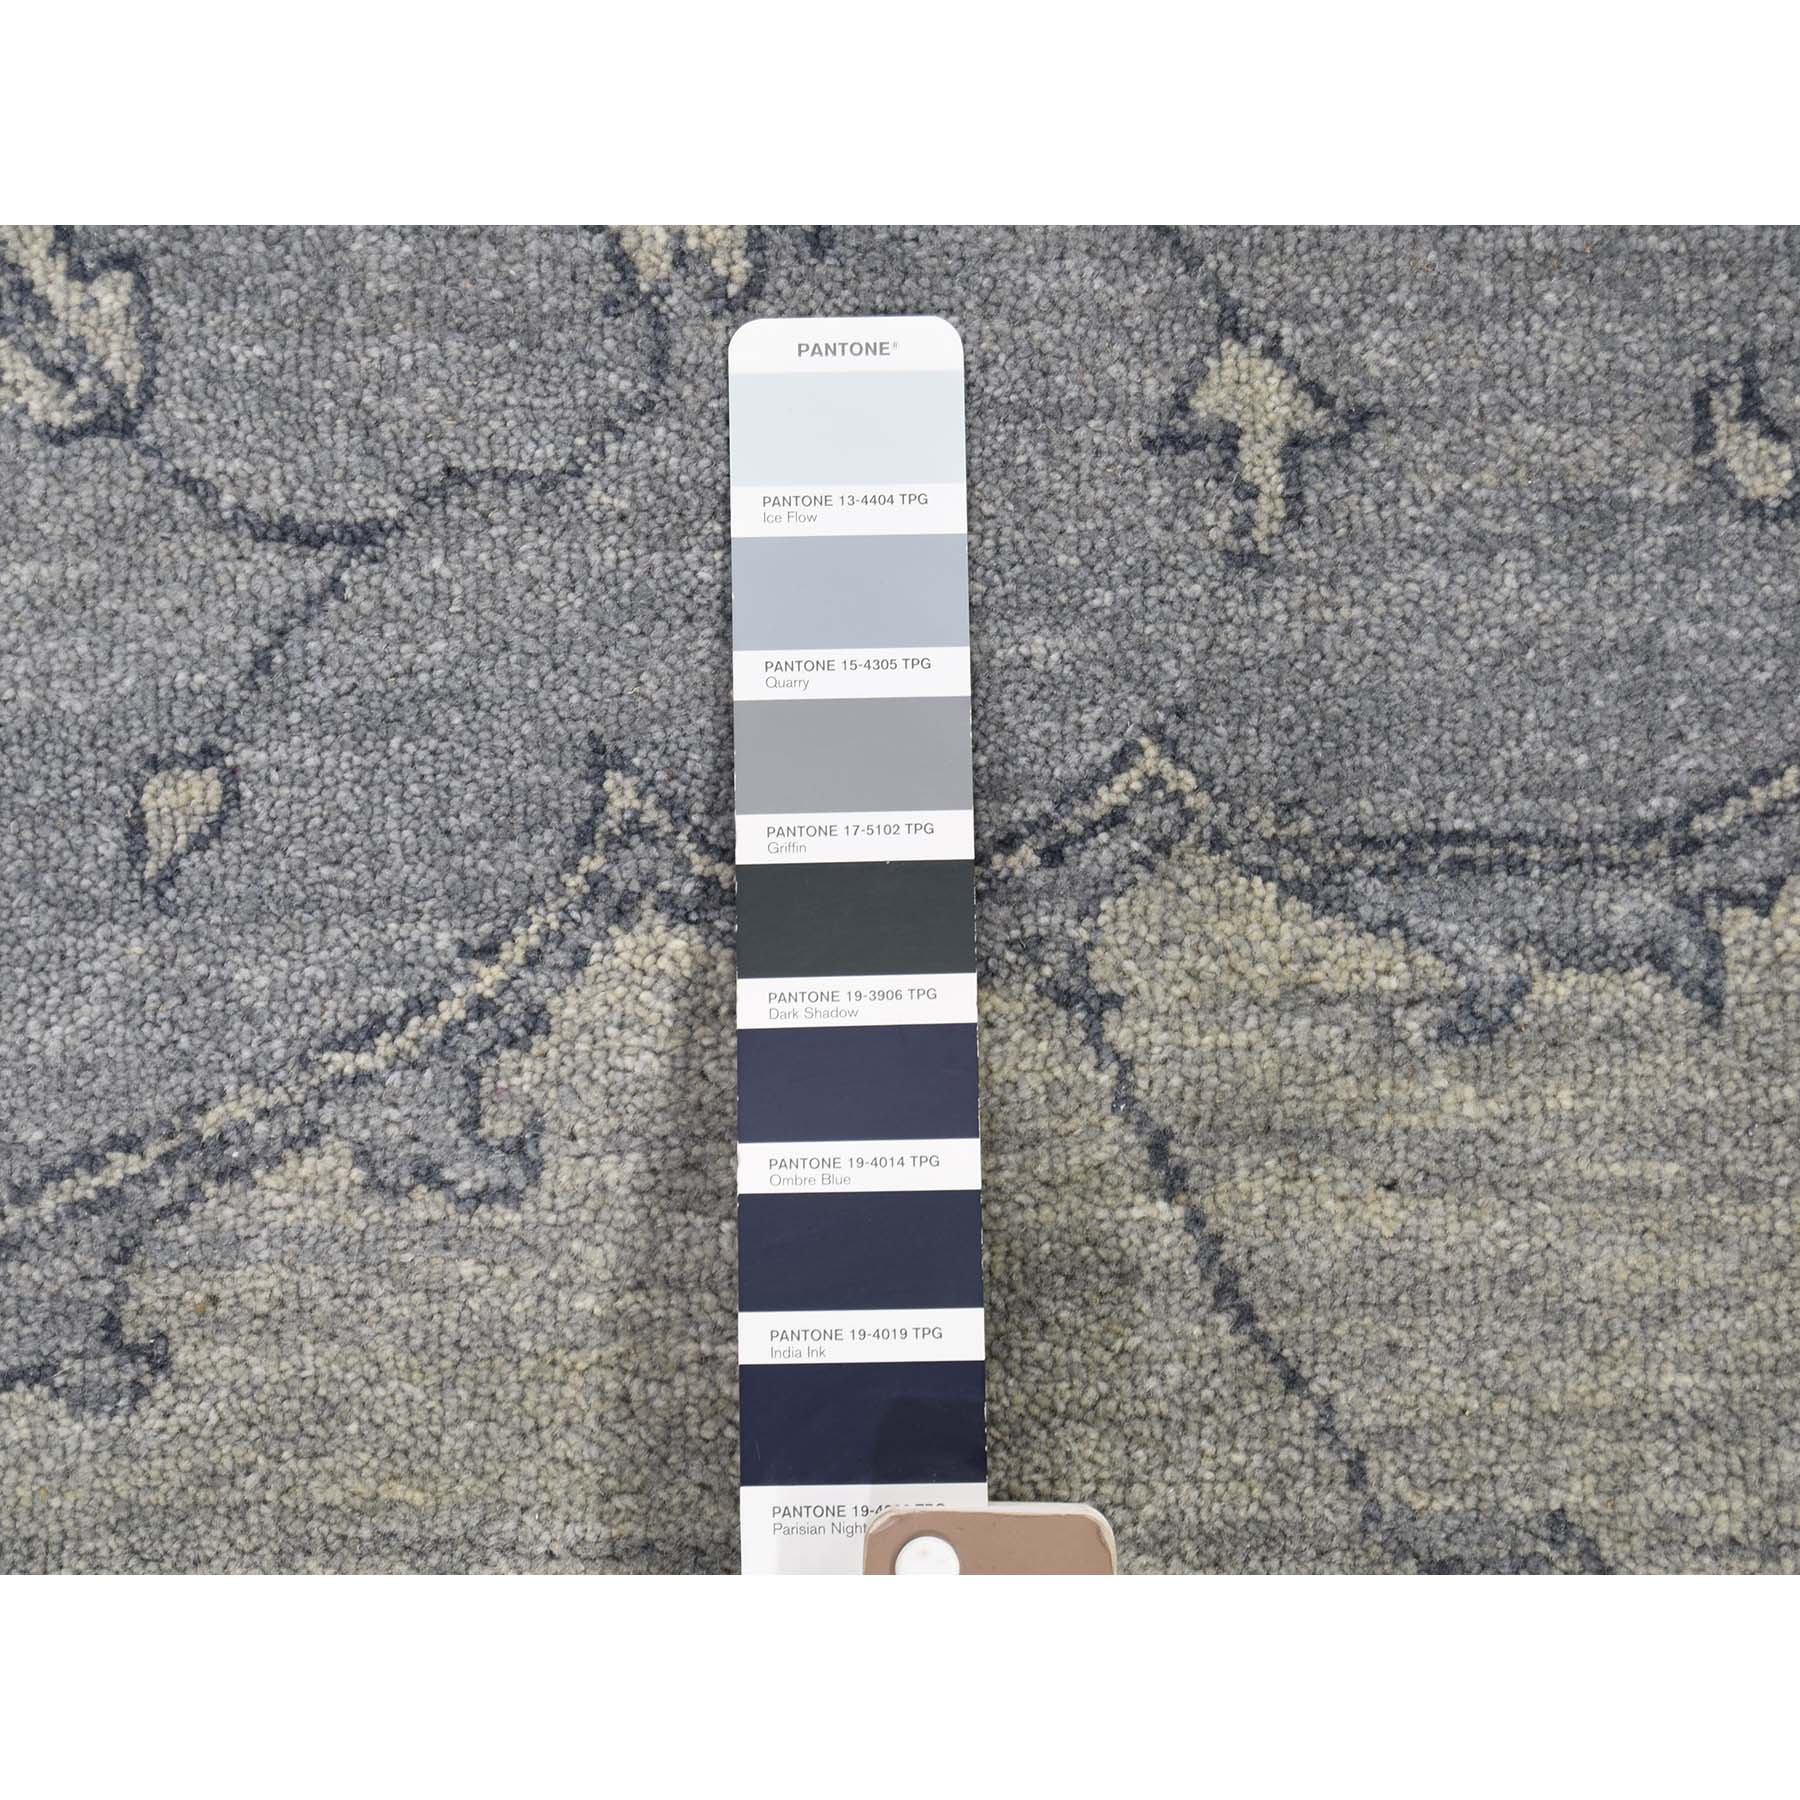 9-x12- Tone On Tone Grey Heriz Hand-Knotted Oriental Rug 